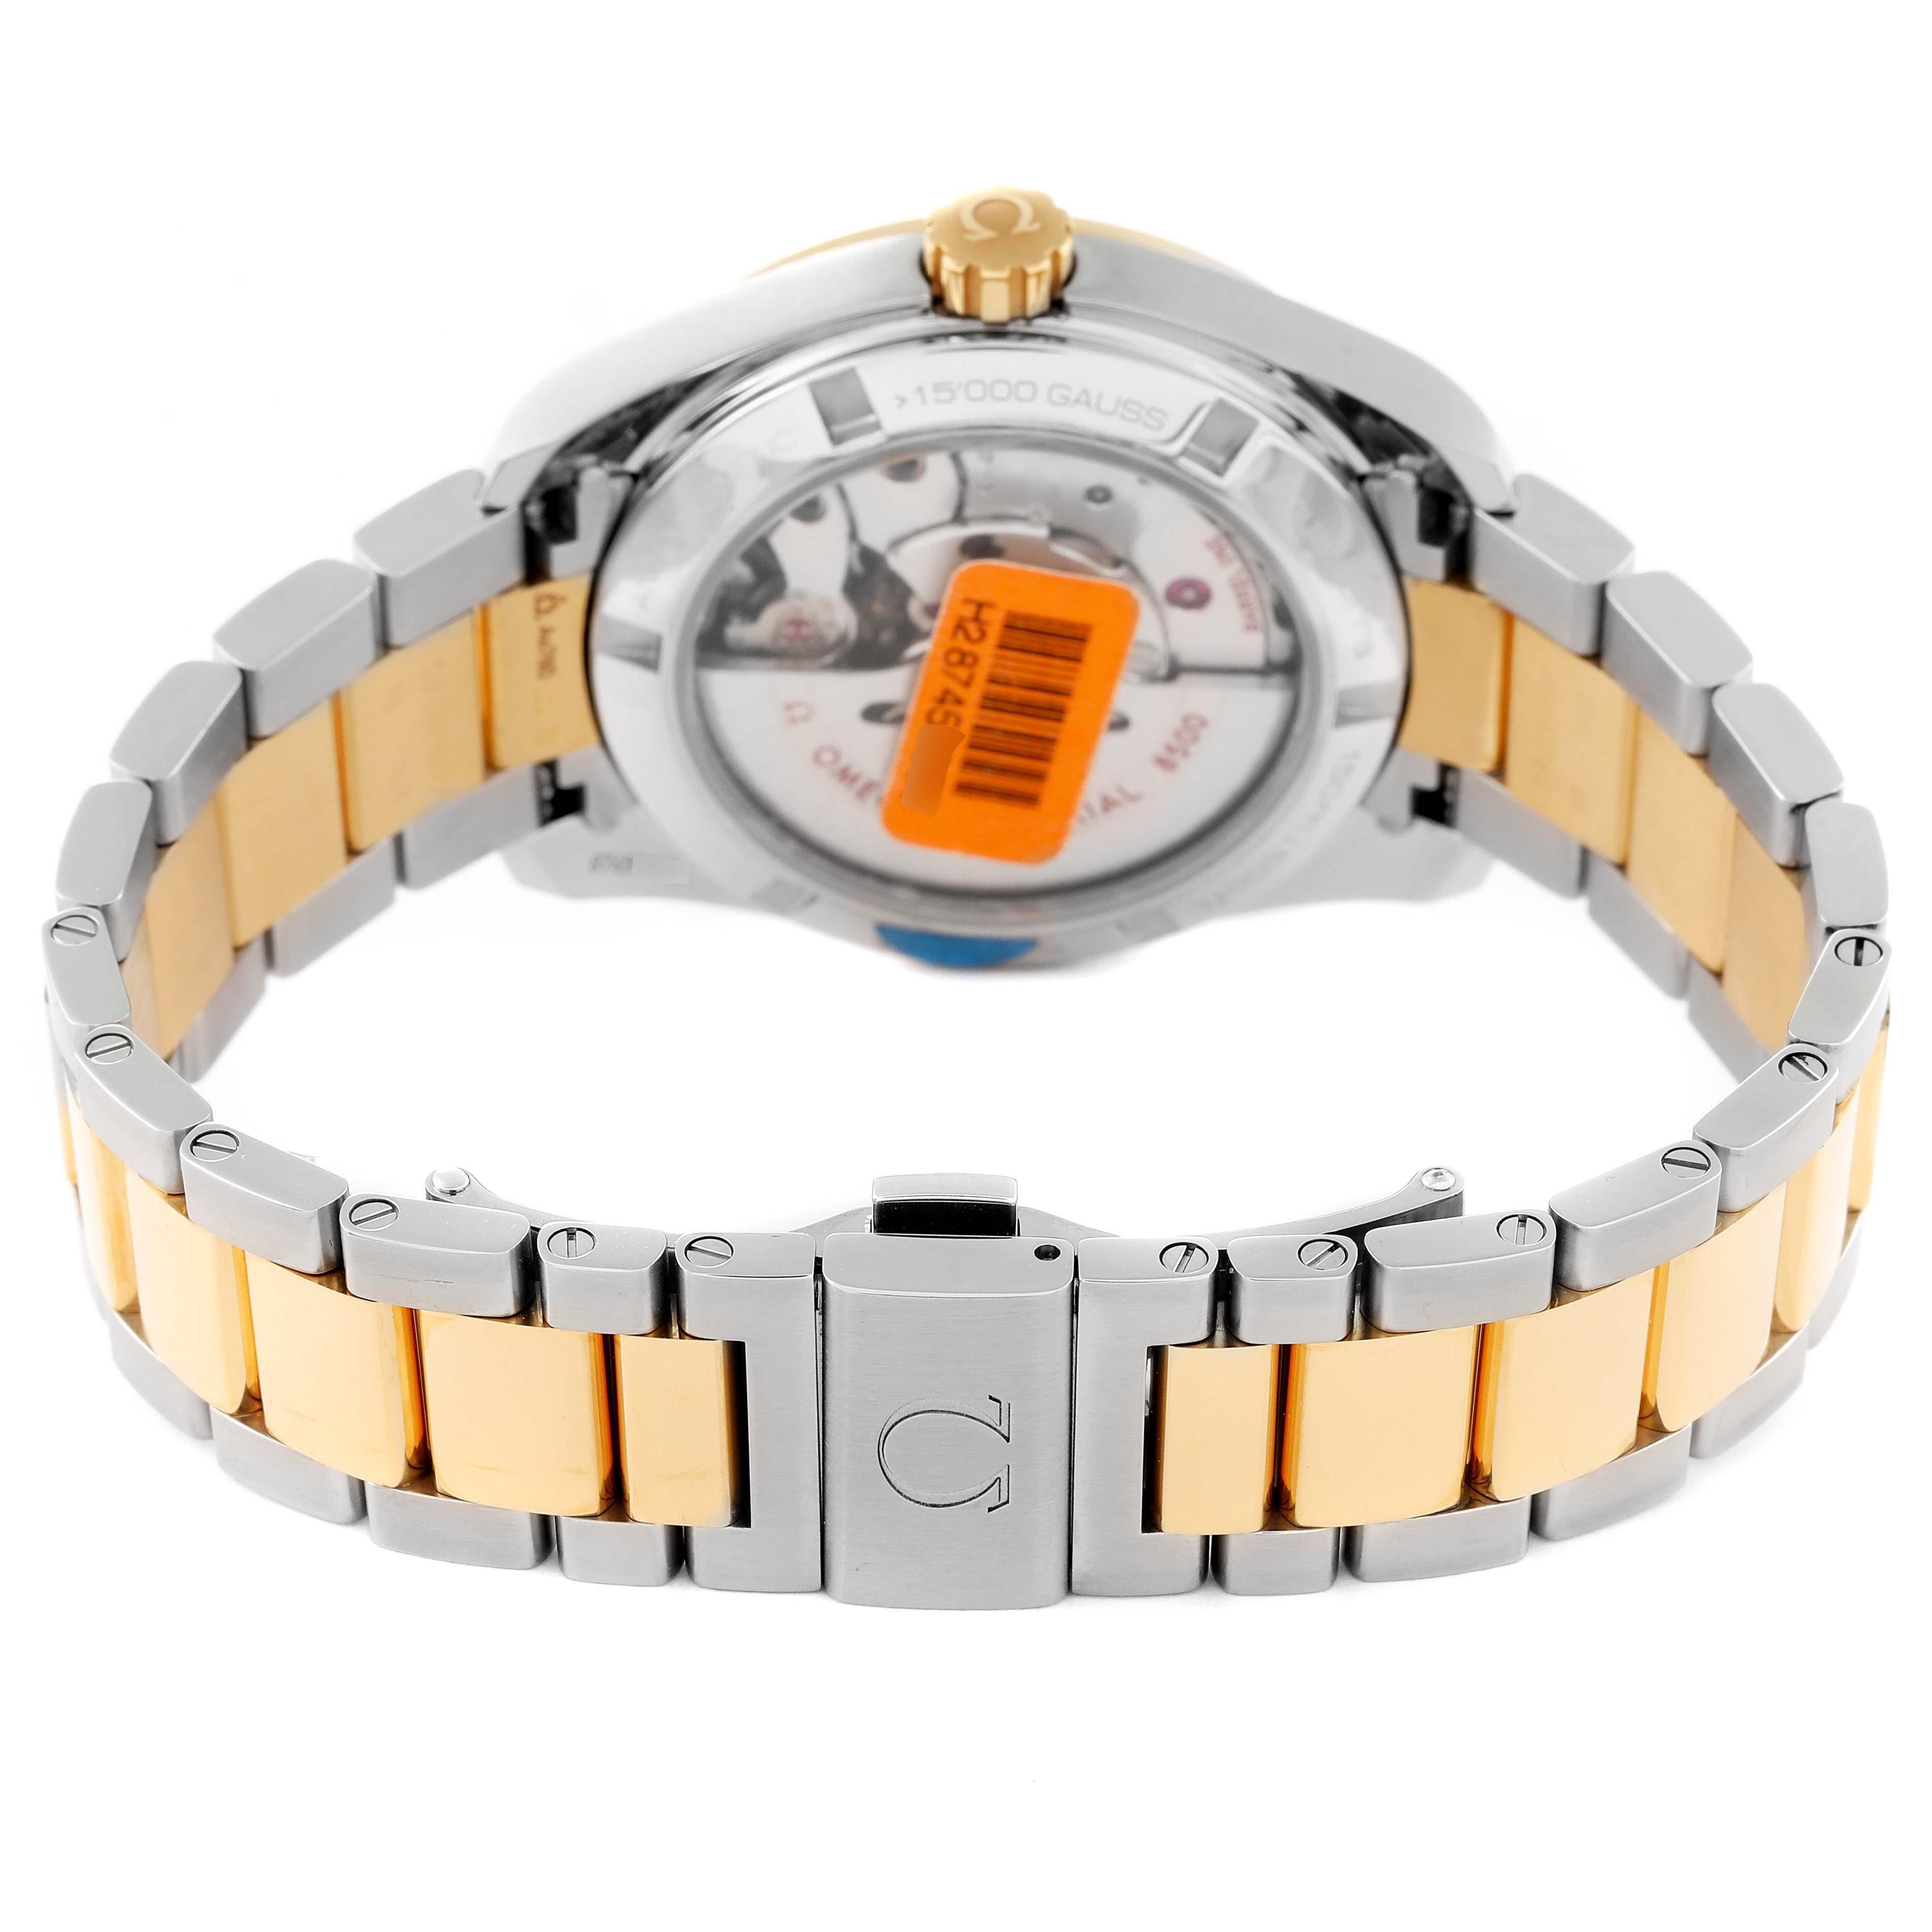 Omega Aqua Terra Steel Yellow Gold Diamond Watch 231.25.39.21.55.002 Unworn 3